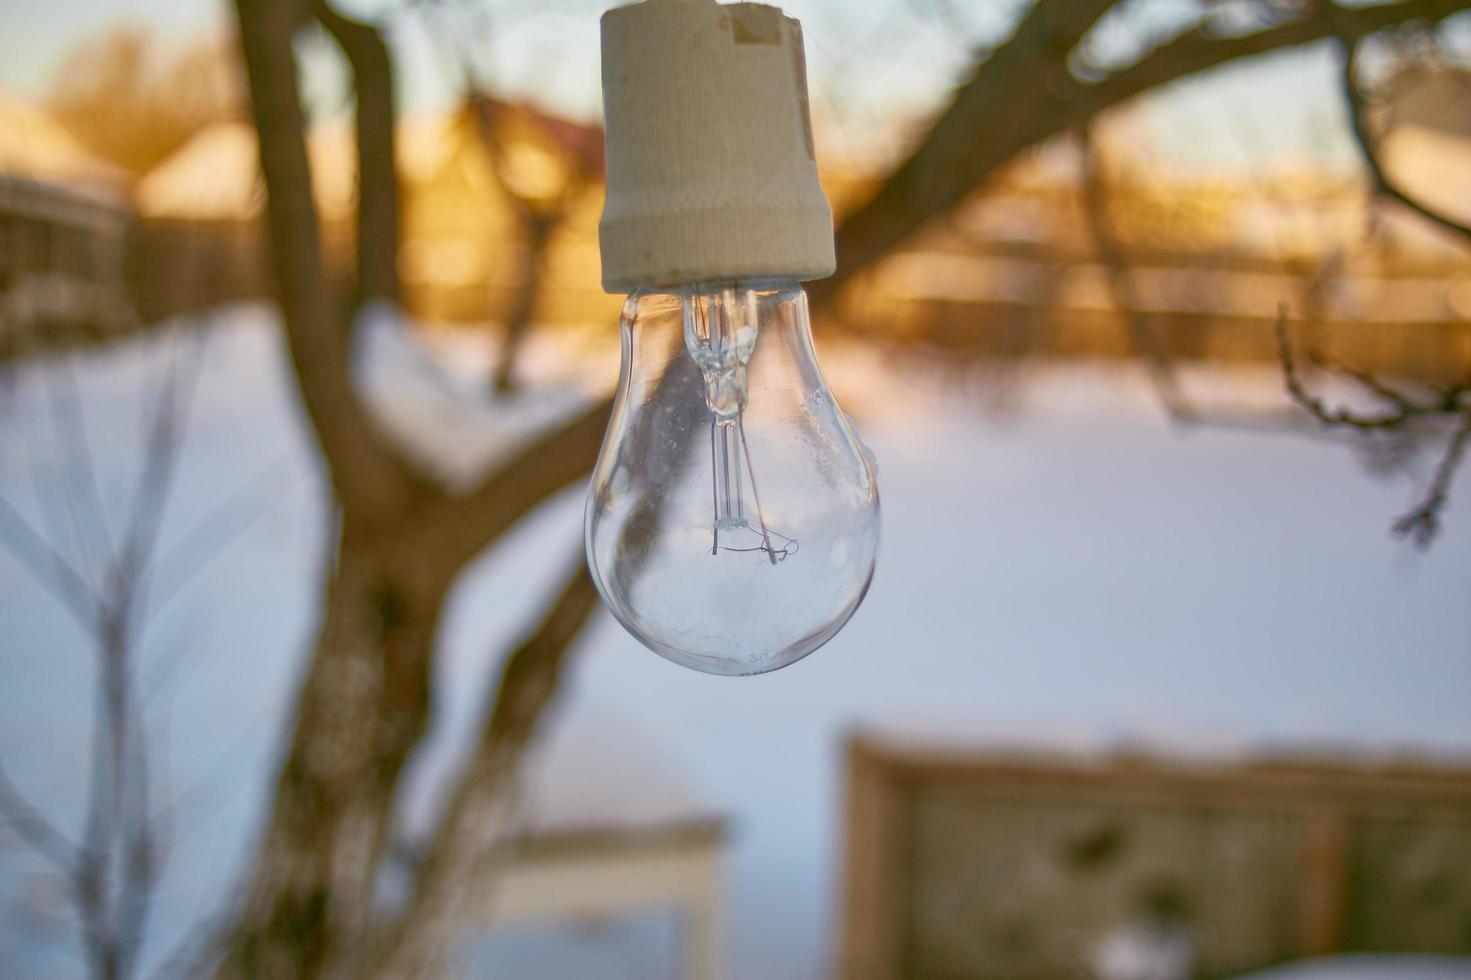 garland of light bulbs in the garden in winter photo